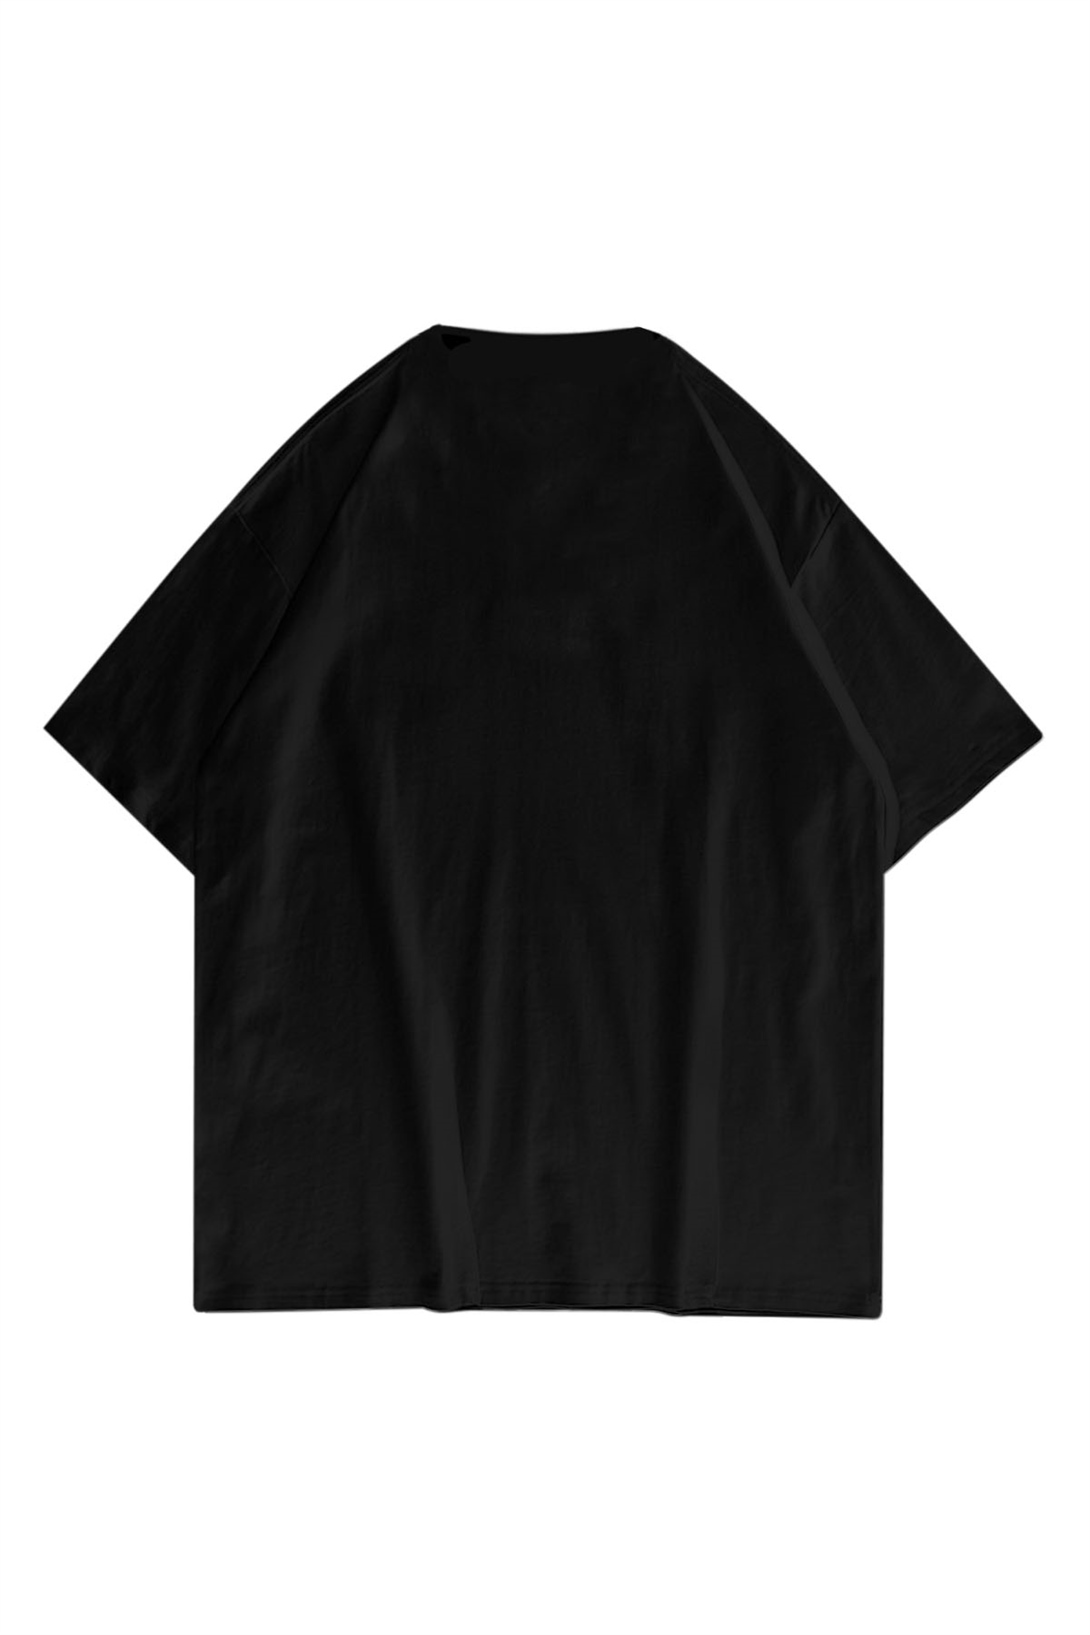 Trendiz Unisex Testing Asap Rocky Siyah T Shirt